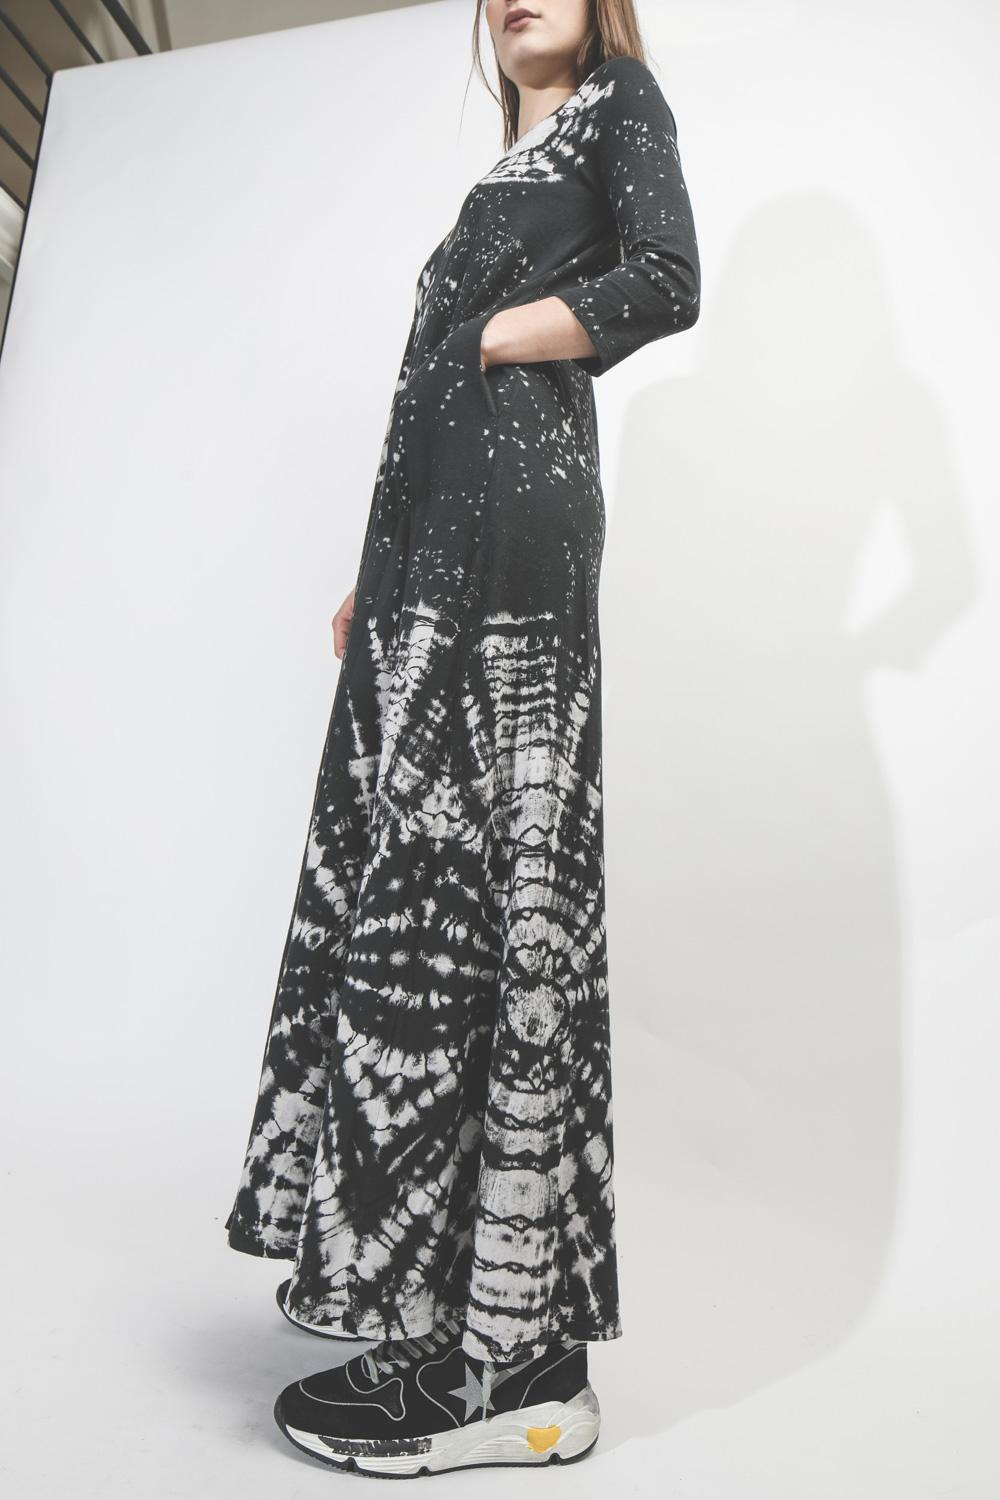 Raquel Allegra Half Sleeve Drama Maxi Dress - Black Constellation Tie Dye  pour Femme